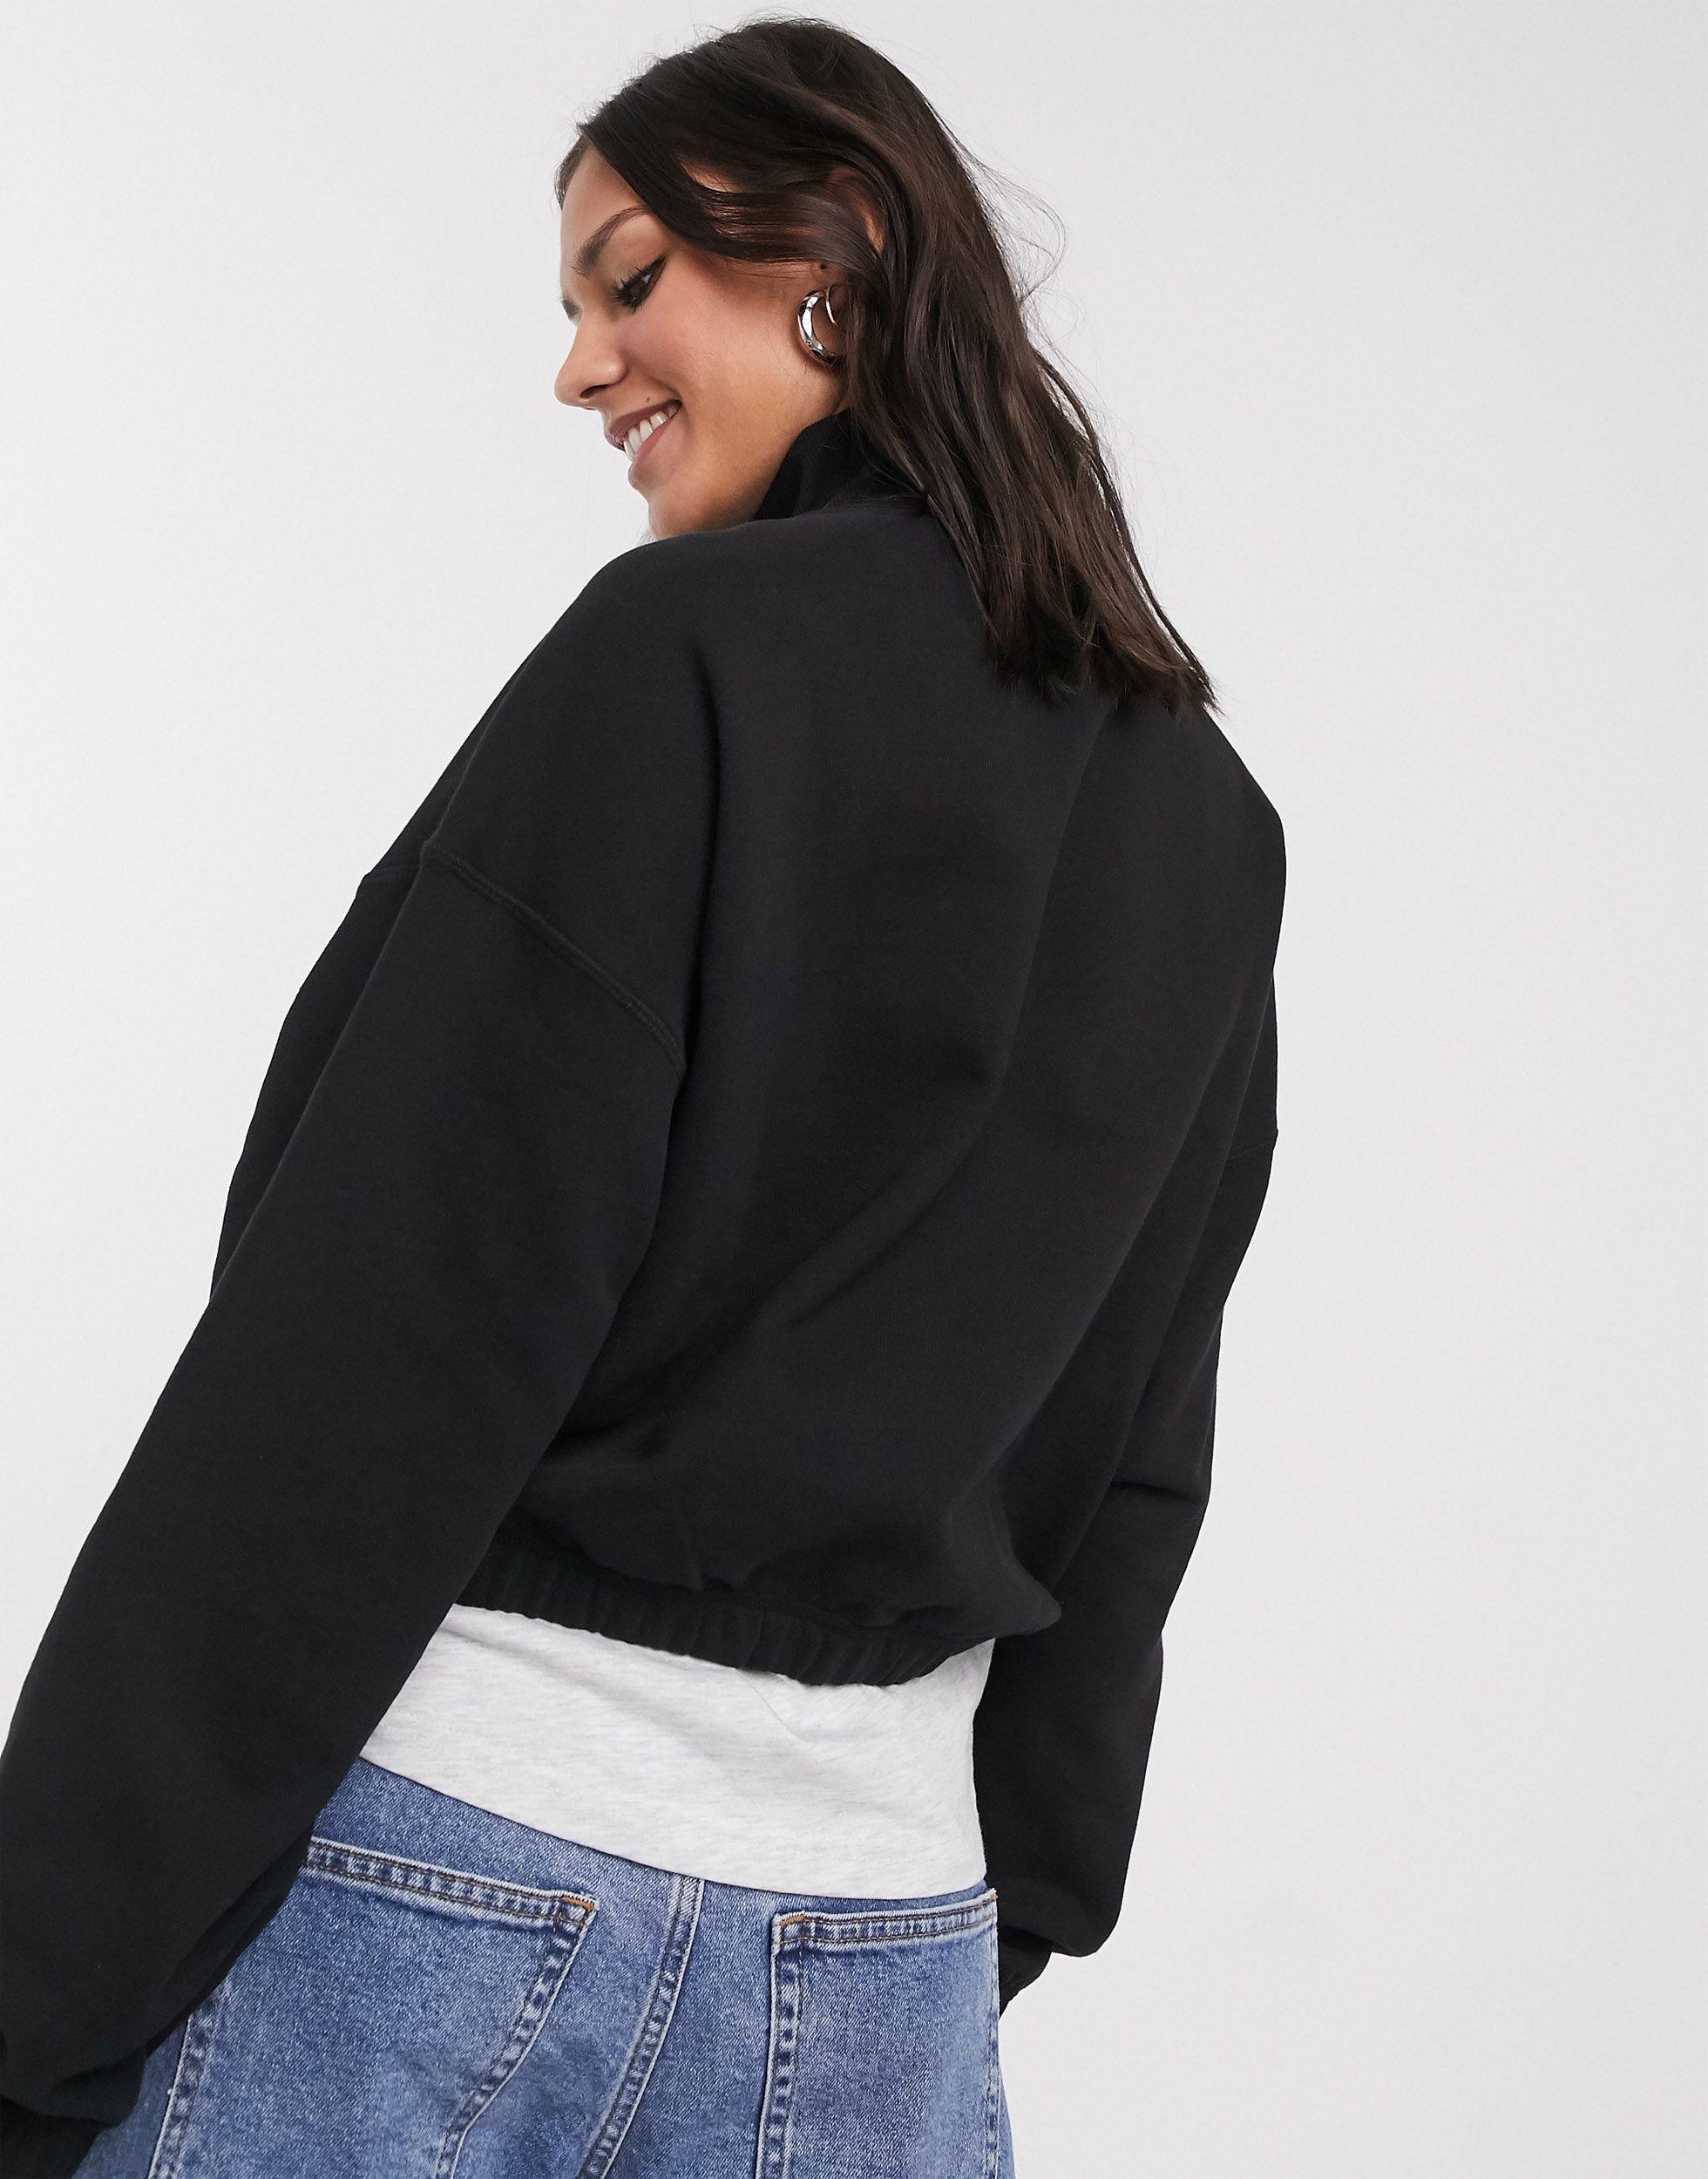 Weekday Cotton Lou Half-zip Sweatshirt in Black - Lyst